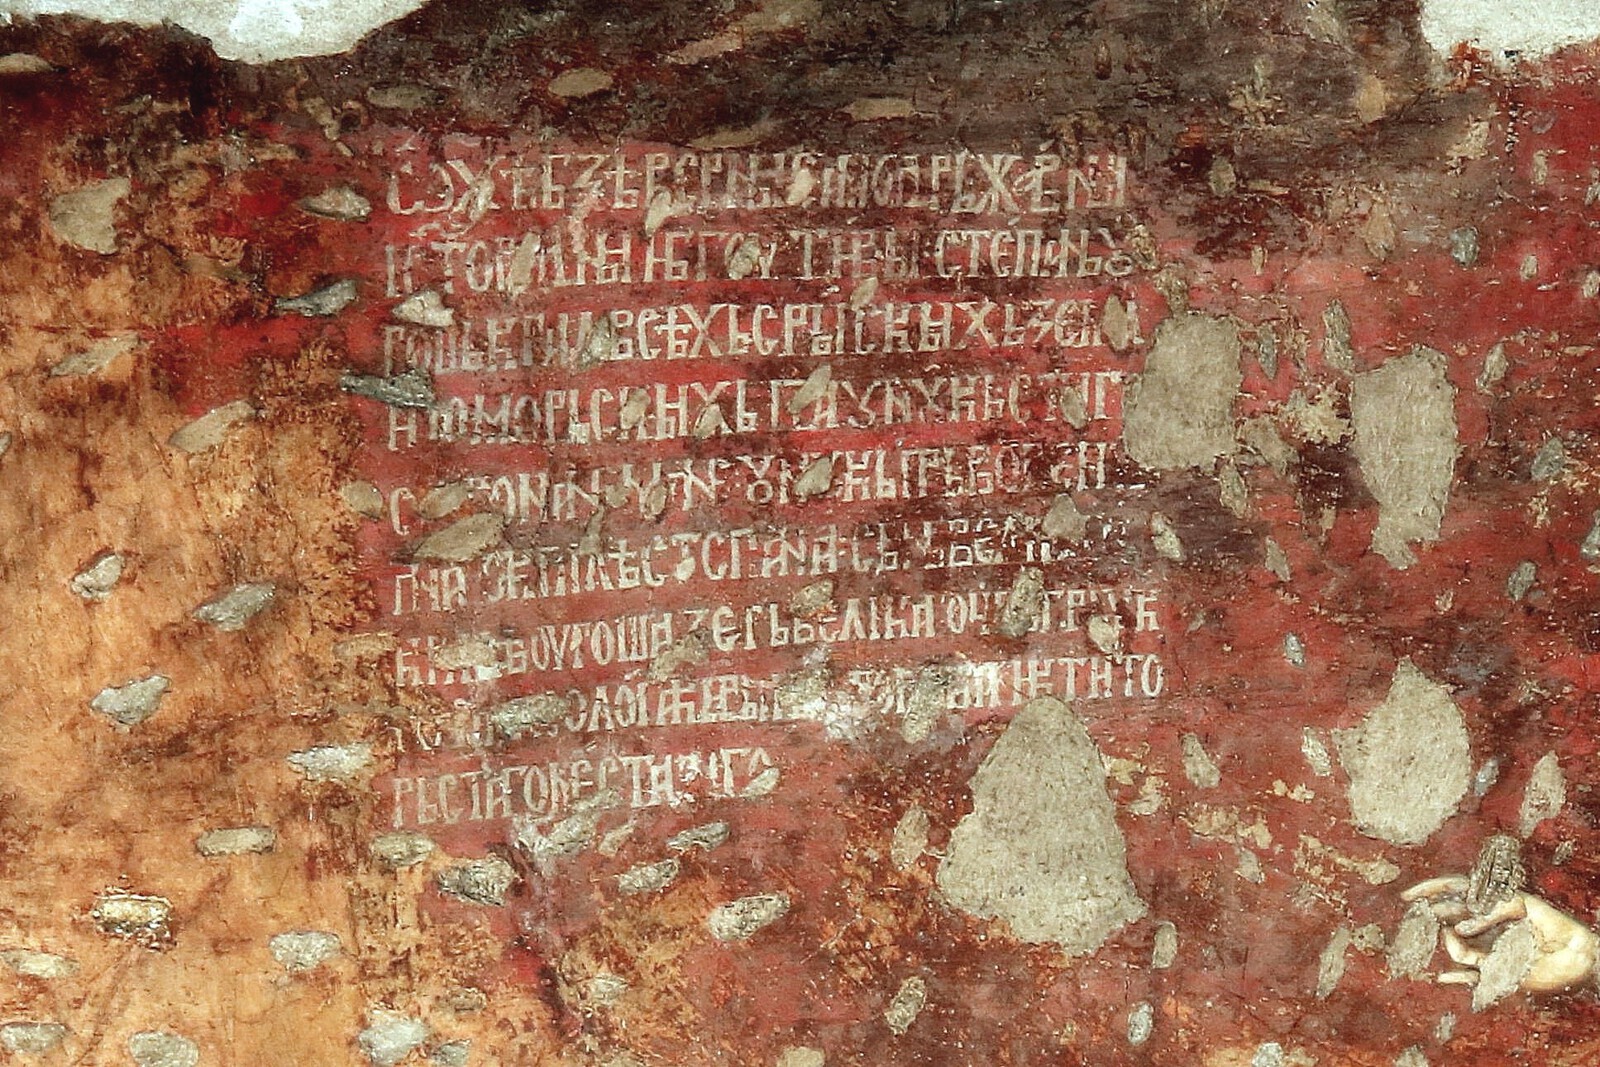 Inscription next to the figure of King Milutin